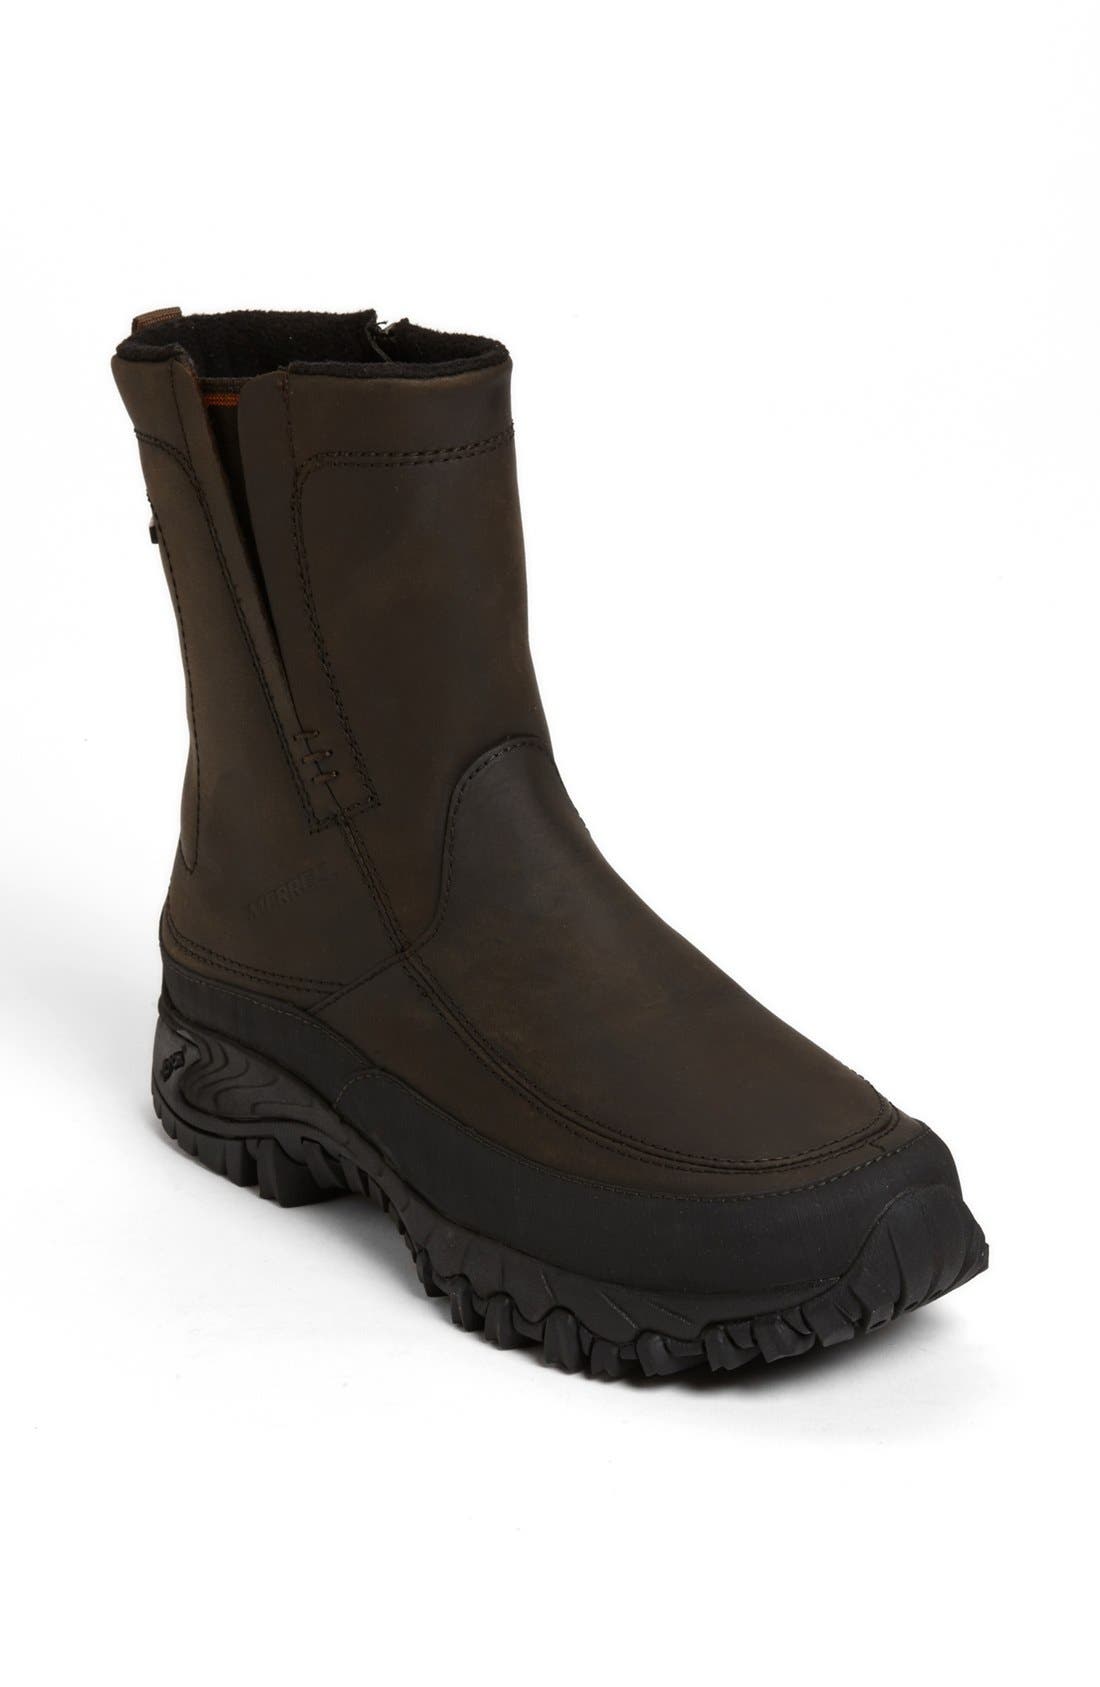 Merrell 'Shiver' Waterproof Boot 